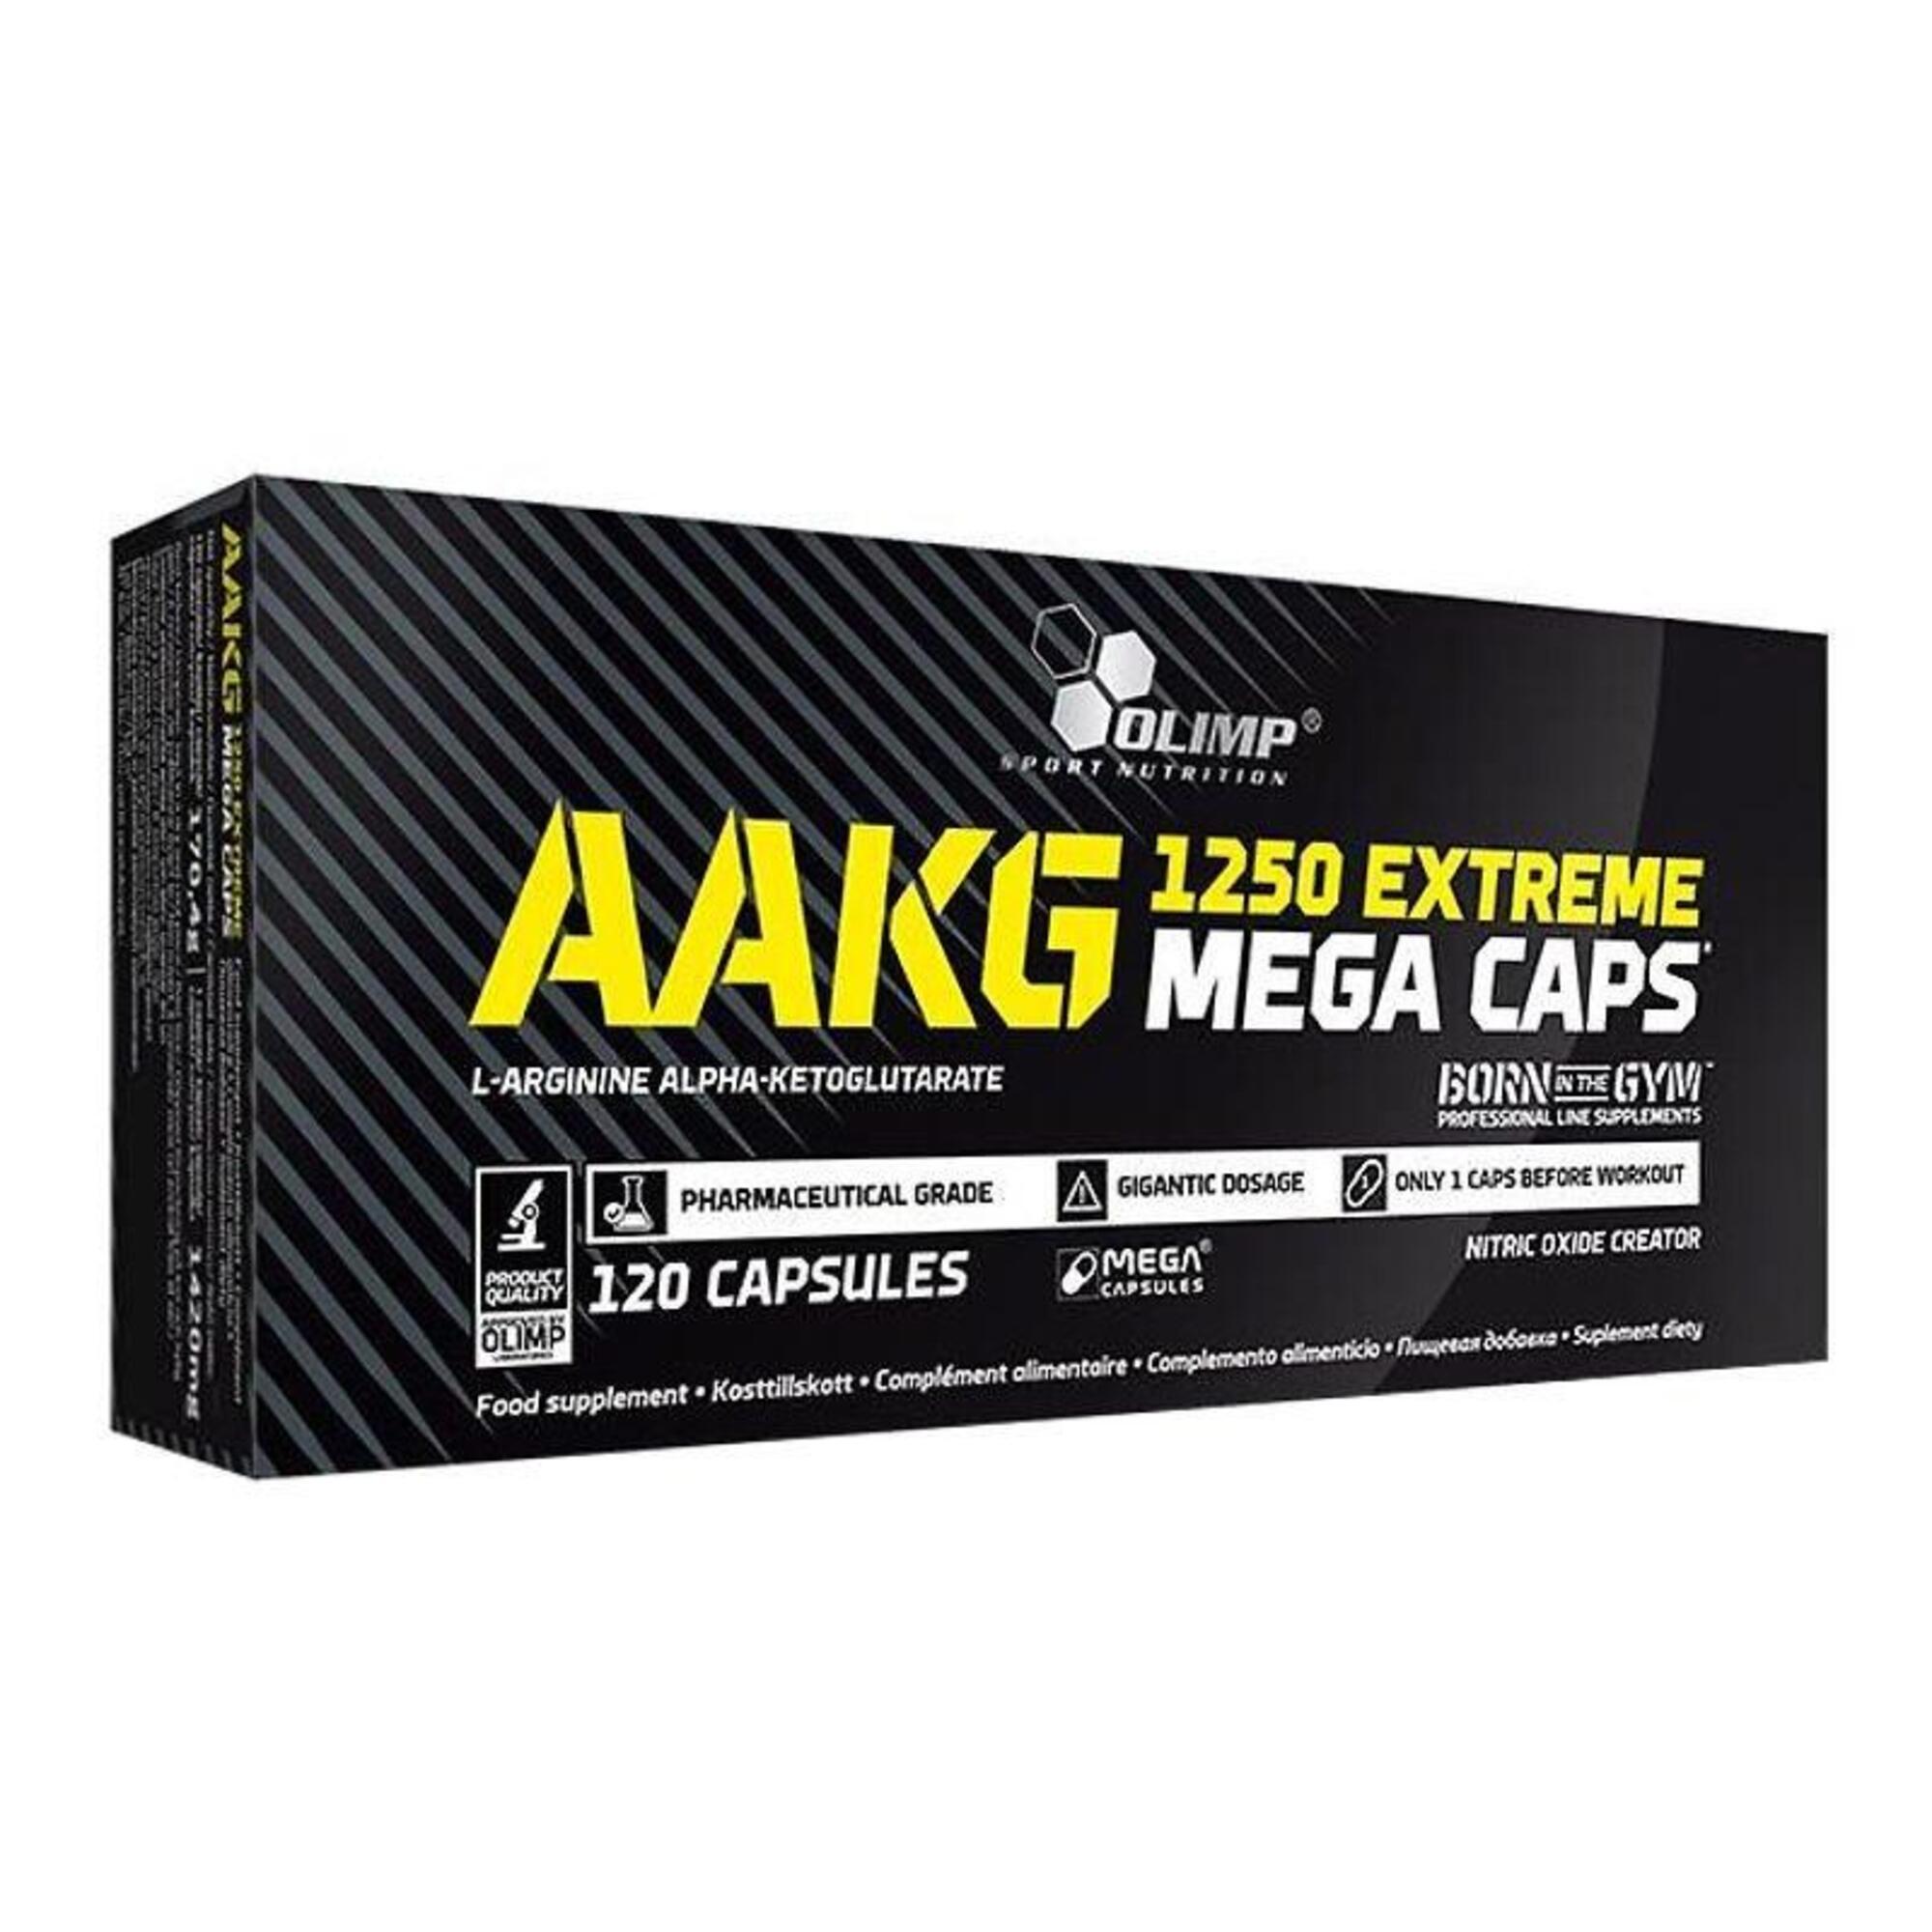 AAKG Extreme Mega Caps 1250 OLIMP 30 kaps